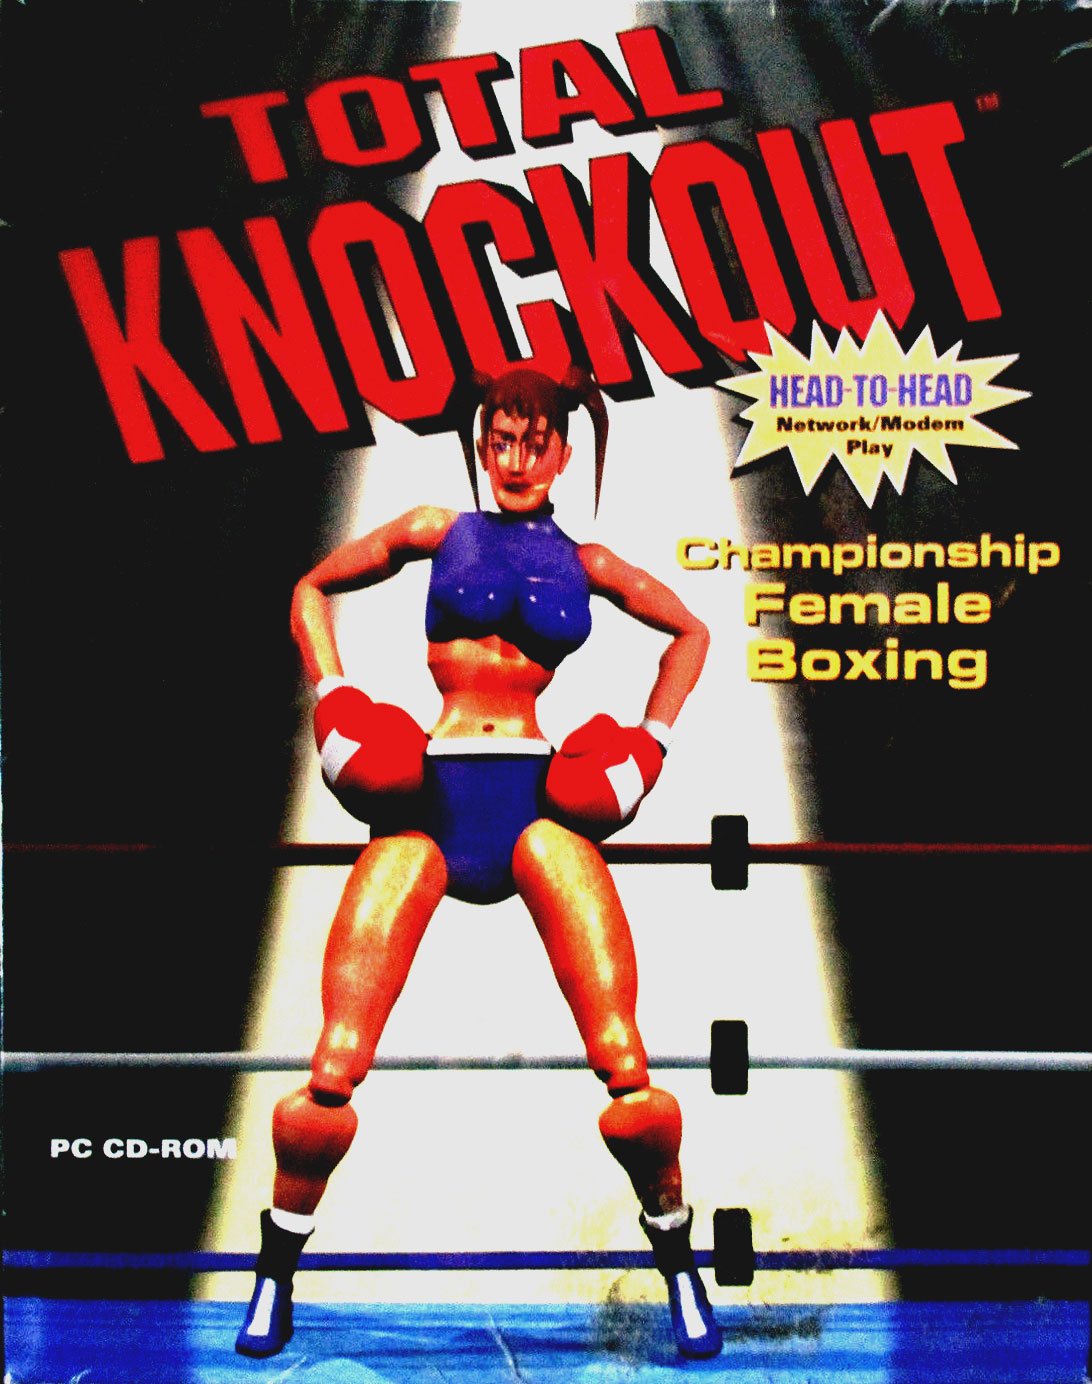 Caratula de Total Knockout Championship Female Boxing para PC